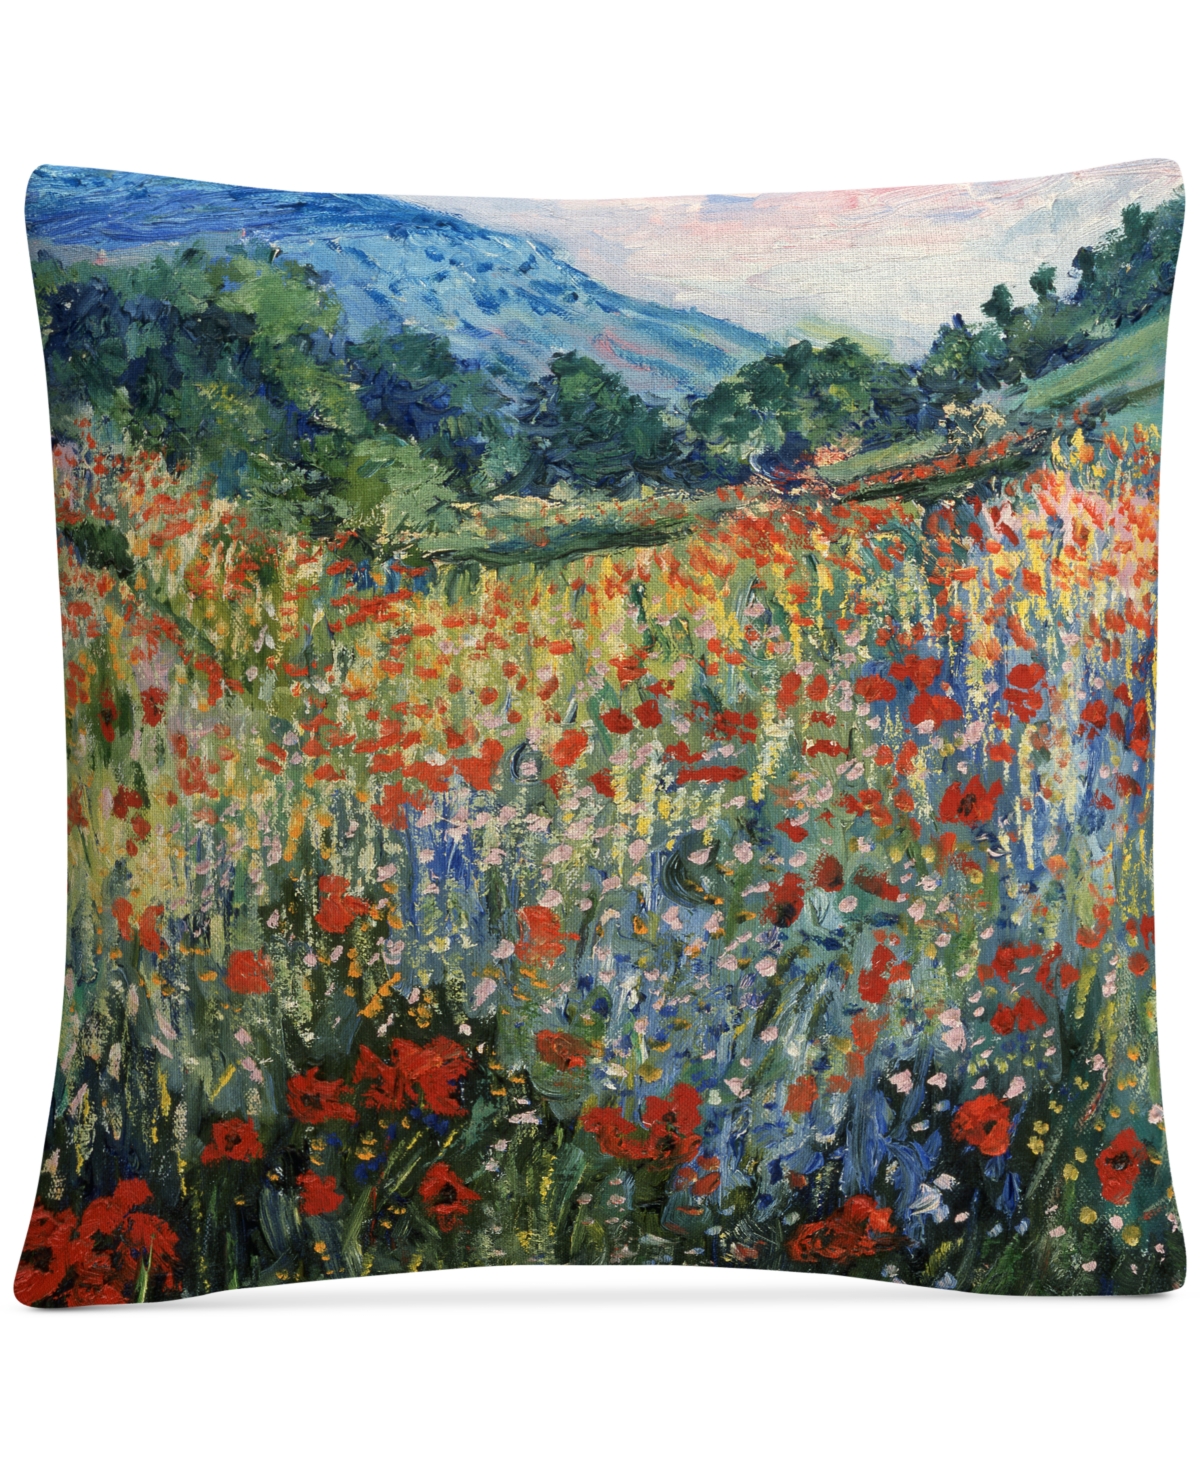 Masters Fine Art Field of Wild Flowers Decorative Pillow, 16 x 16